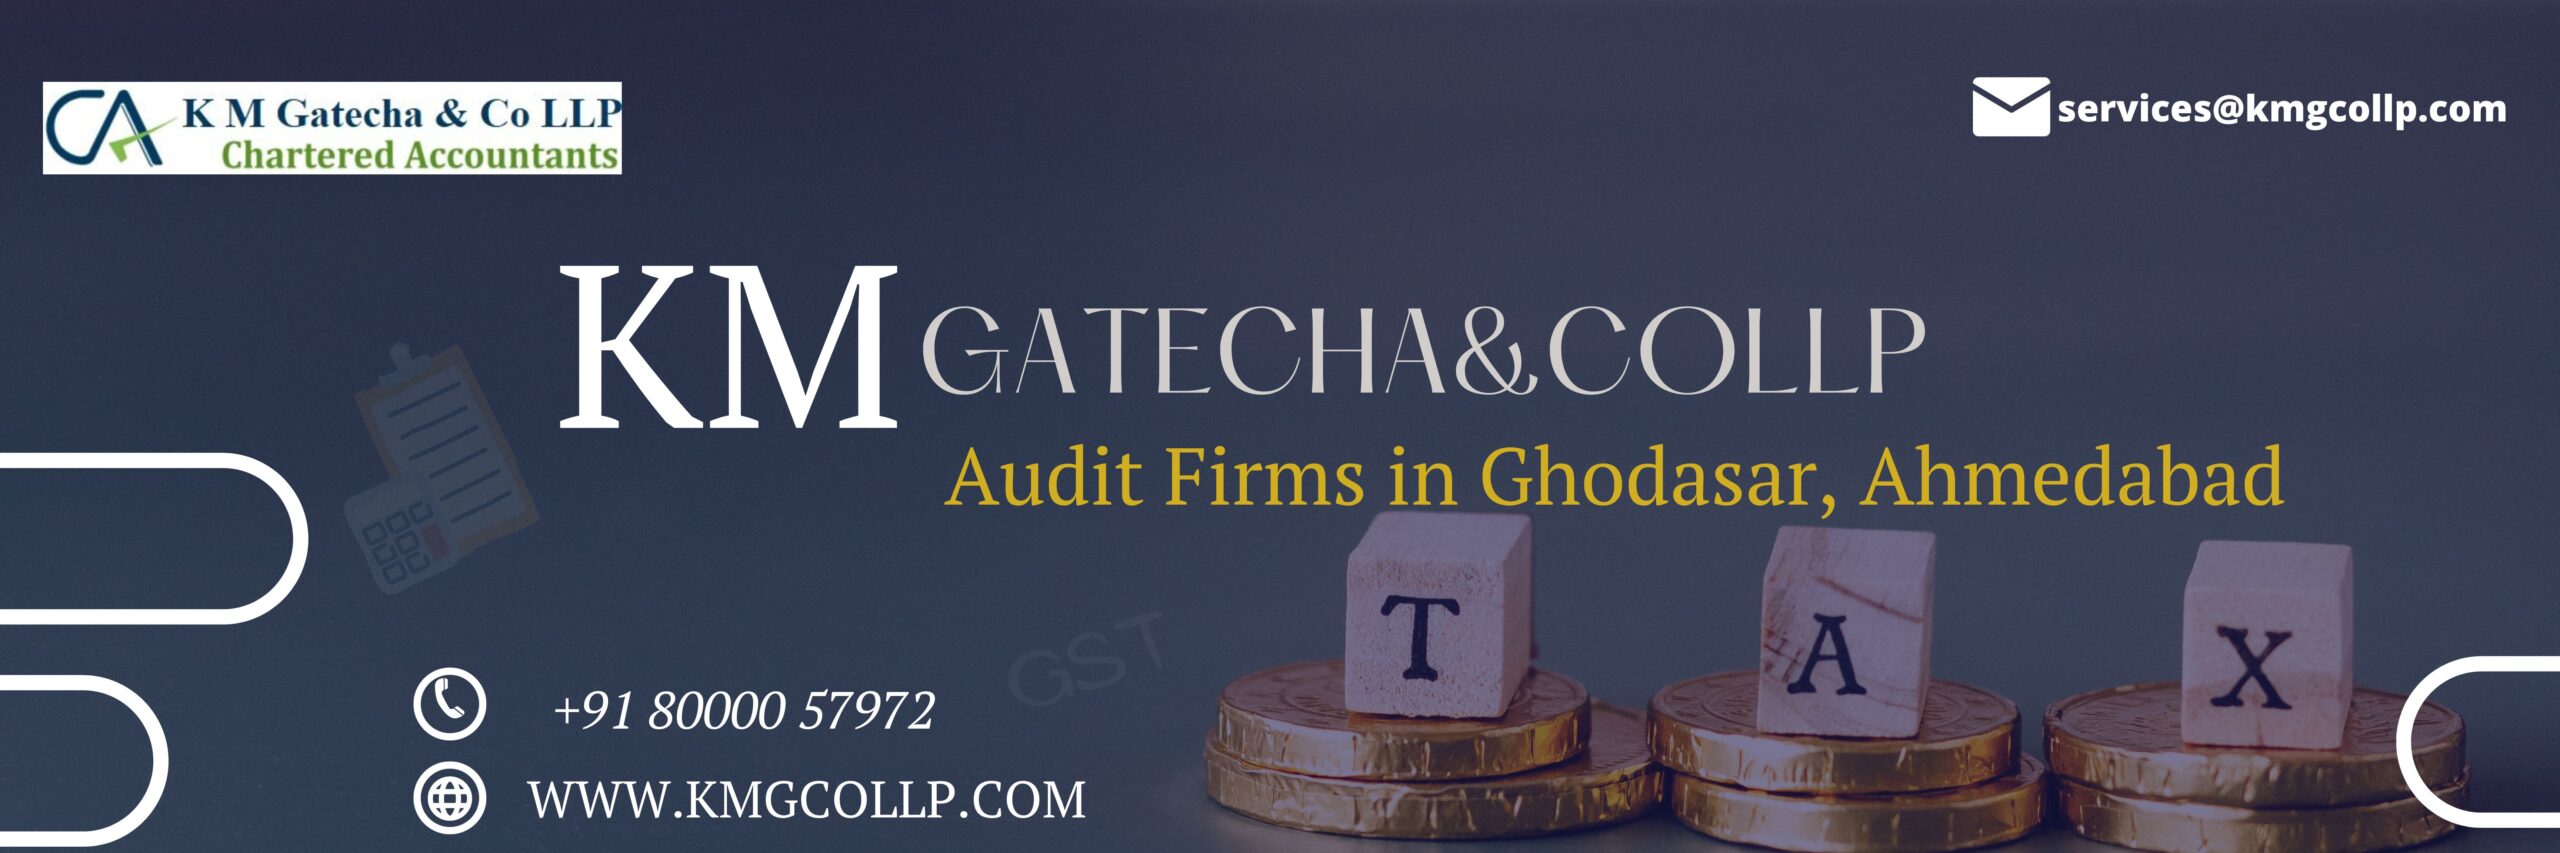 Audit Firms in Ghodasar, Ahmedabad